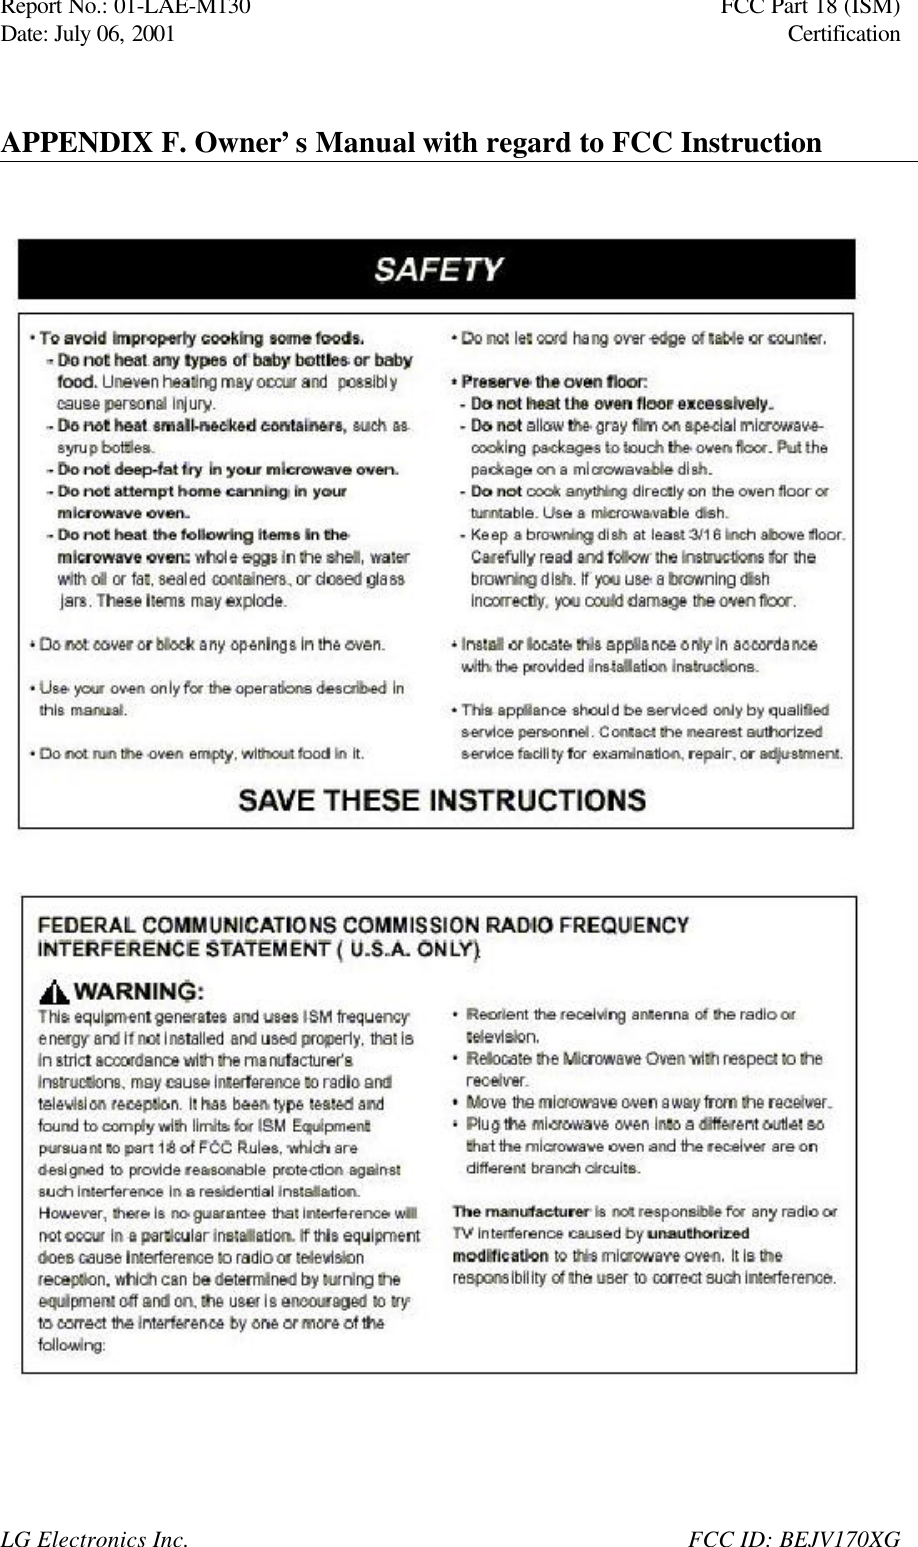 Report No.: 01-LAE-M130 FCC Part 18 (ISM)Date: July 06, 2001 CertificationLG Electronics Inc. FCC ID: BEJV170XGAPPENDIX F. Owner’s Manual with regard to FCC Instruction